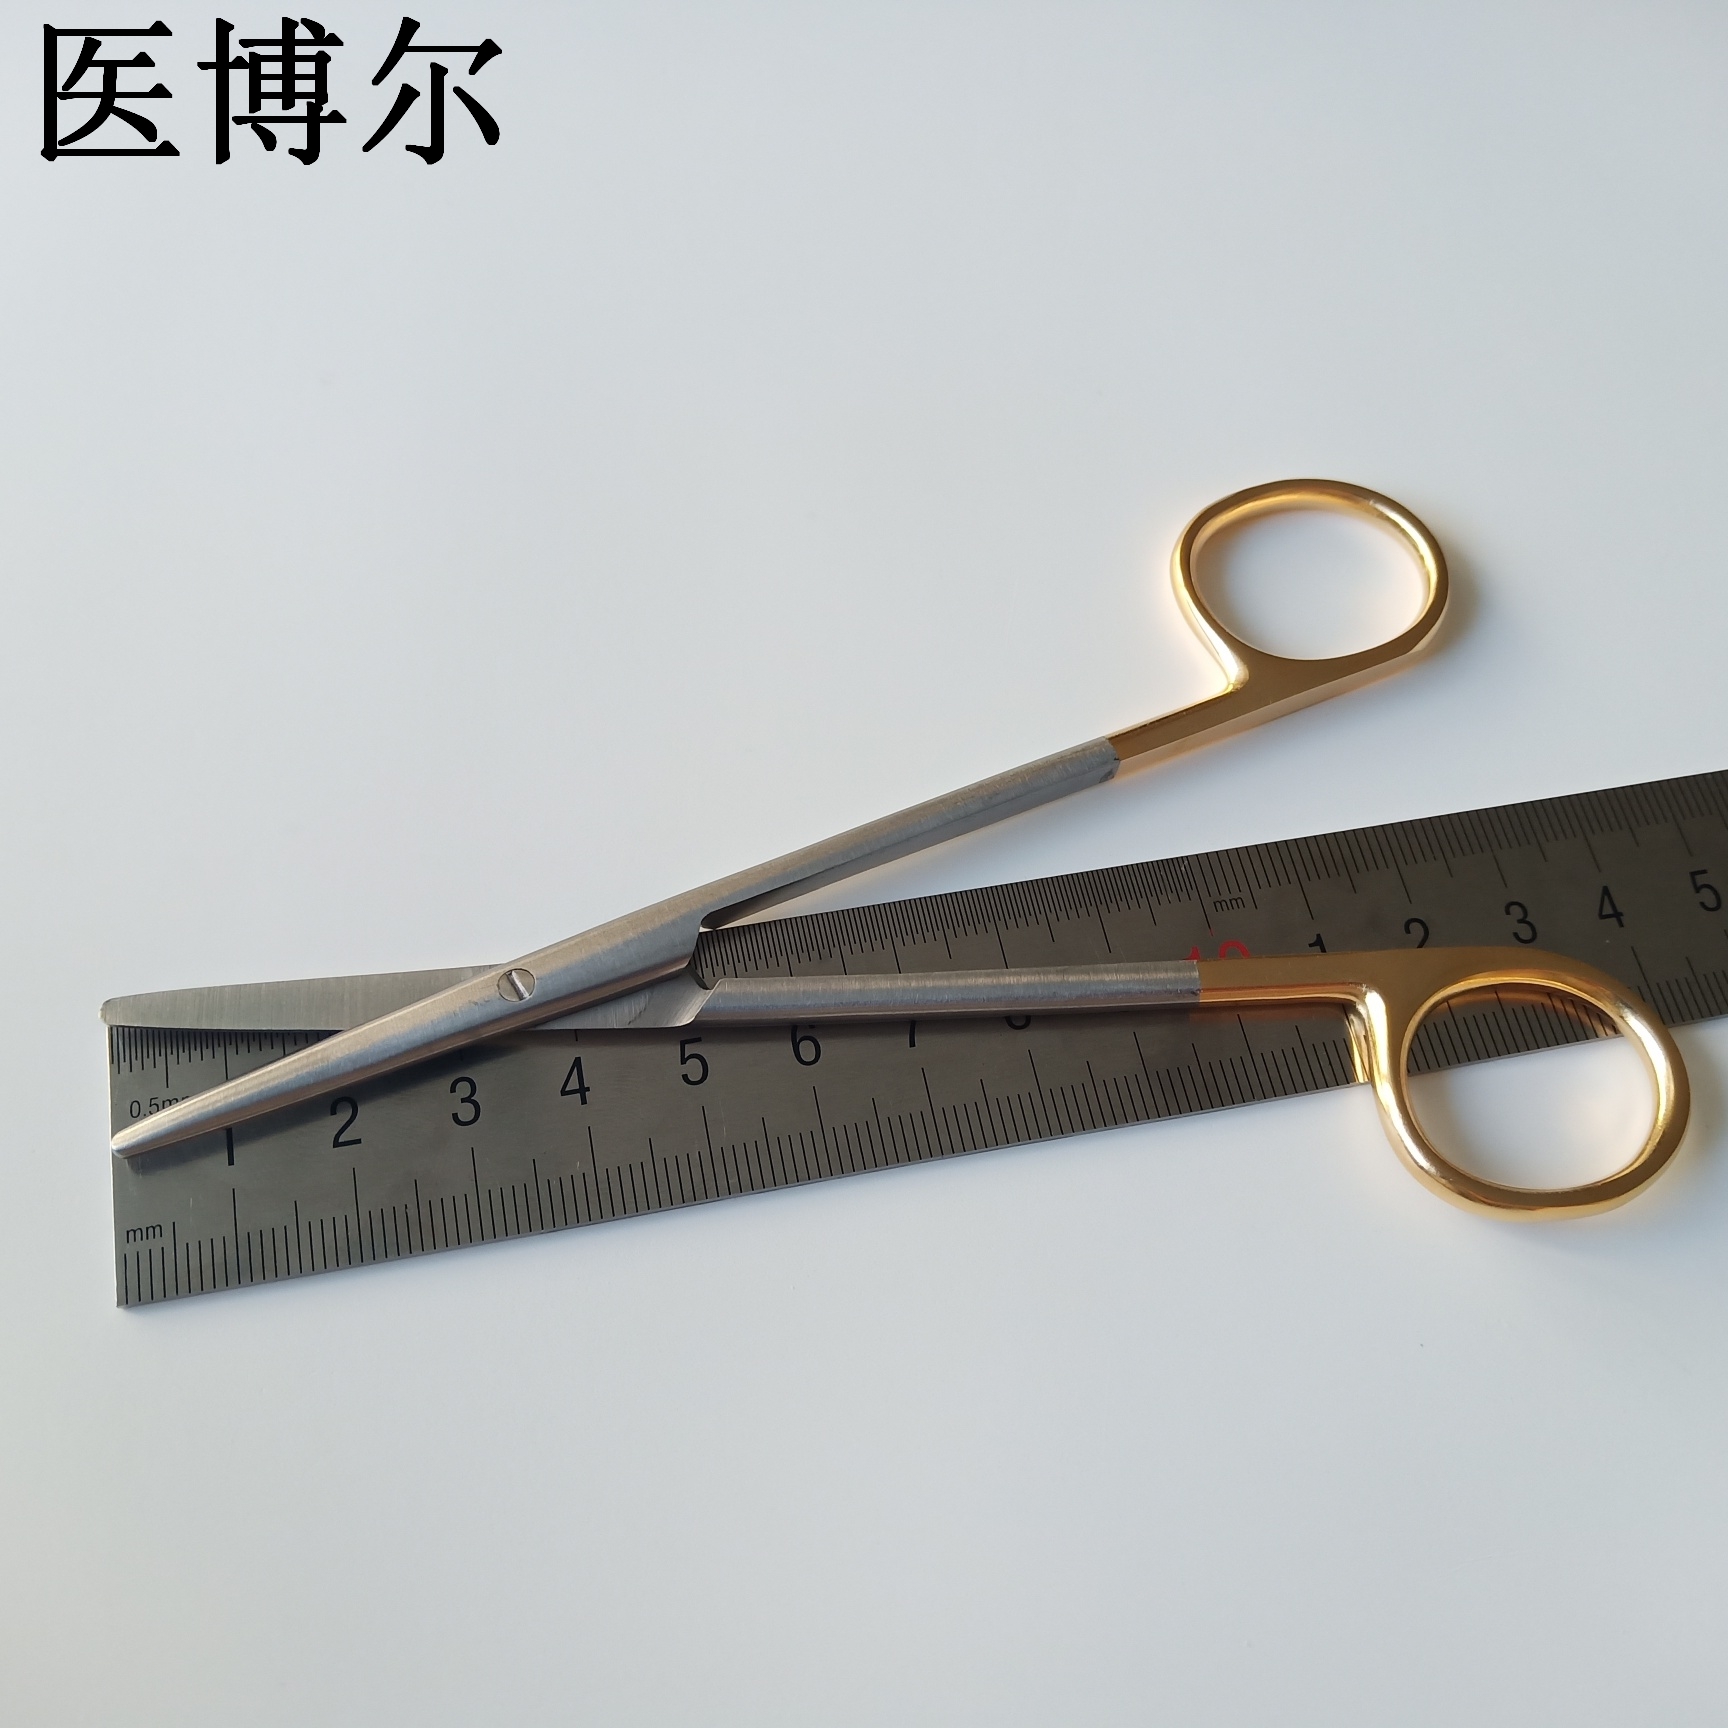 14cm精细直圆剪刀 (7).jpg